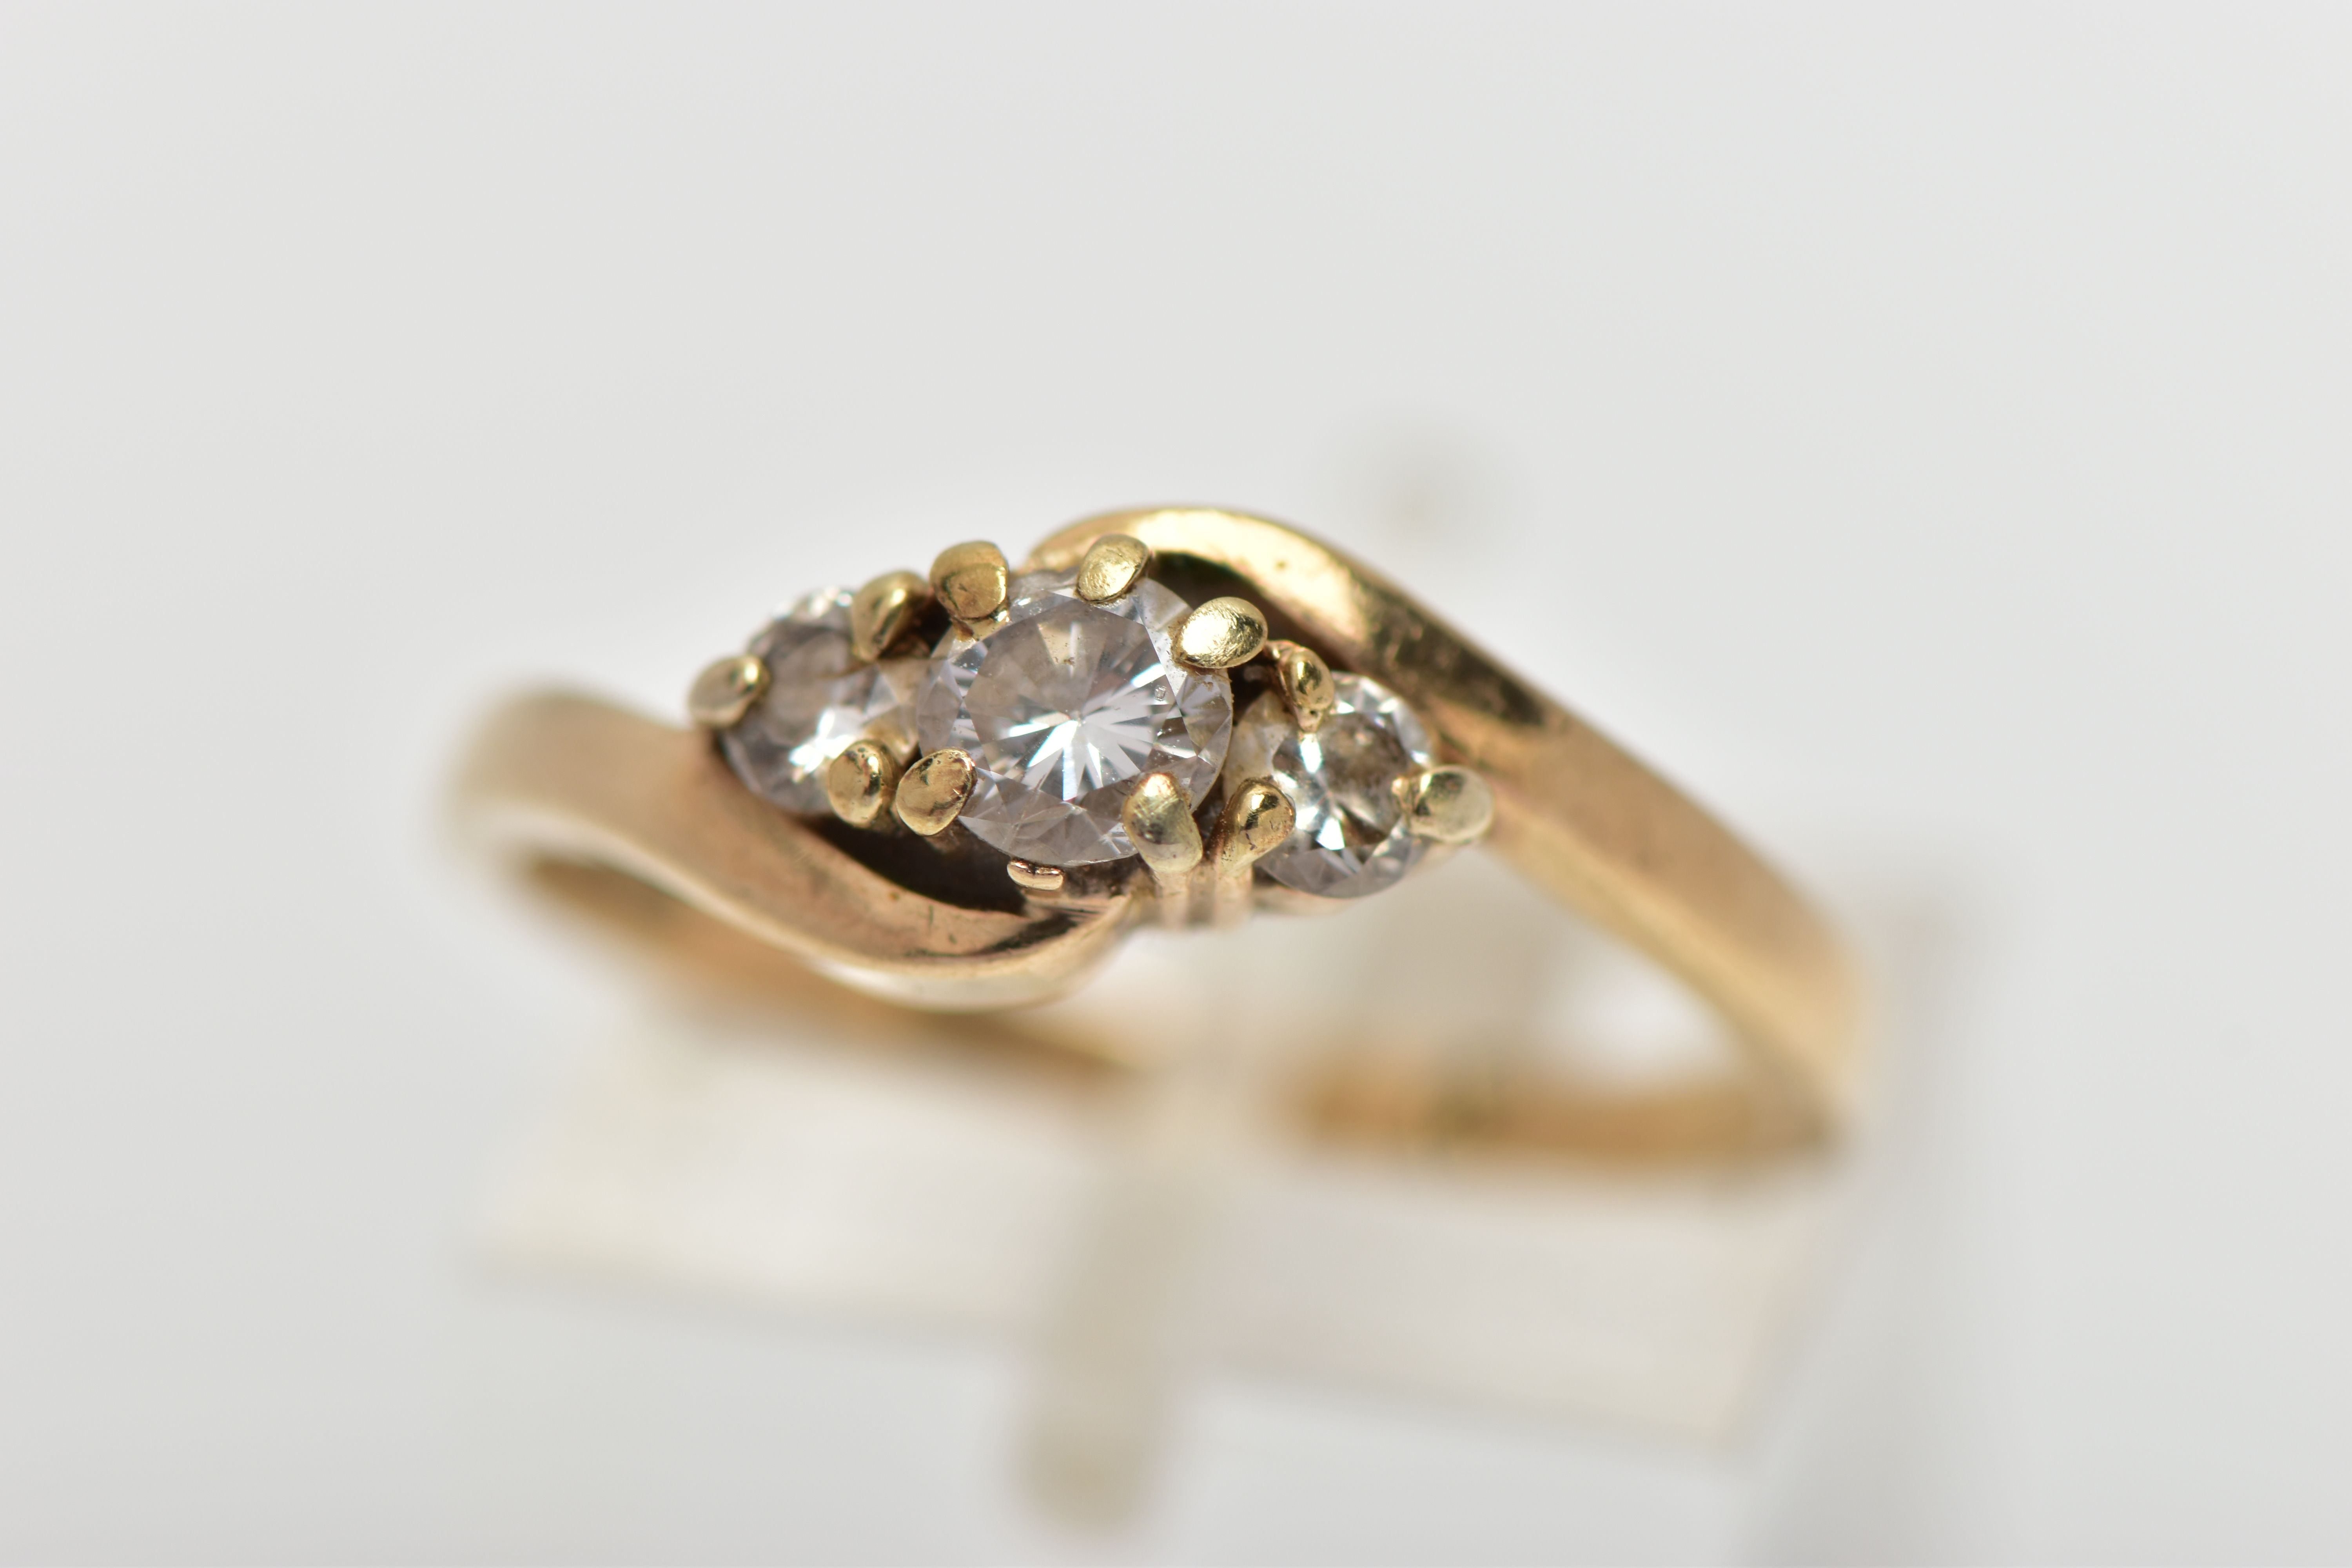 A 9CT GOLD DIAMOND THREE STONE RING, comprising three graduated brilliant cut diamonds, to the